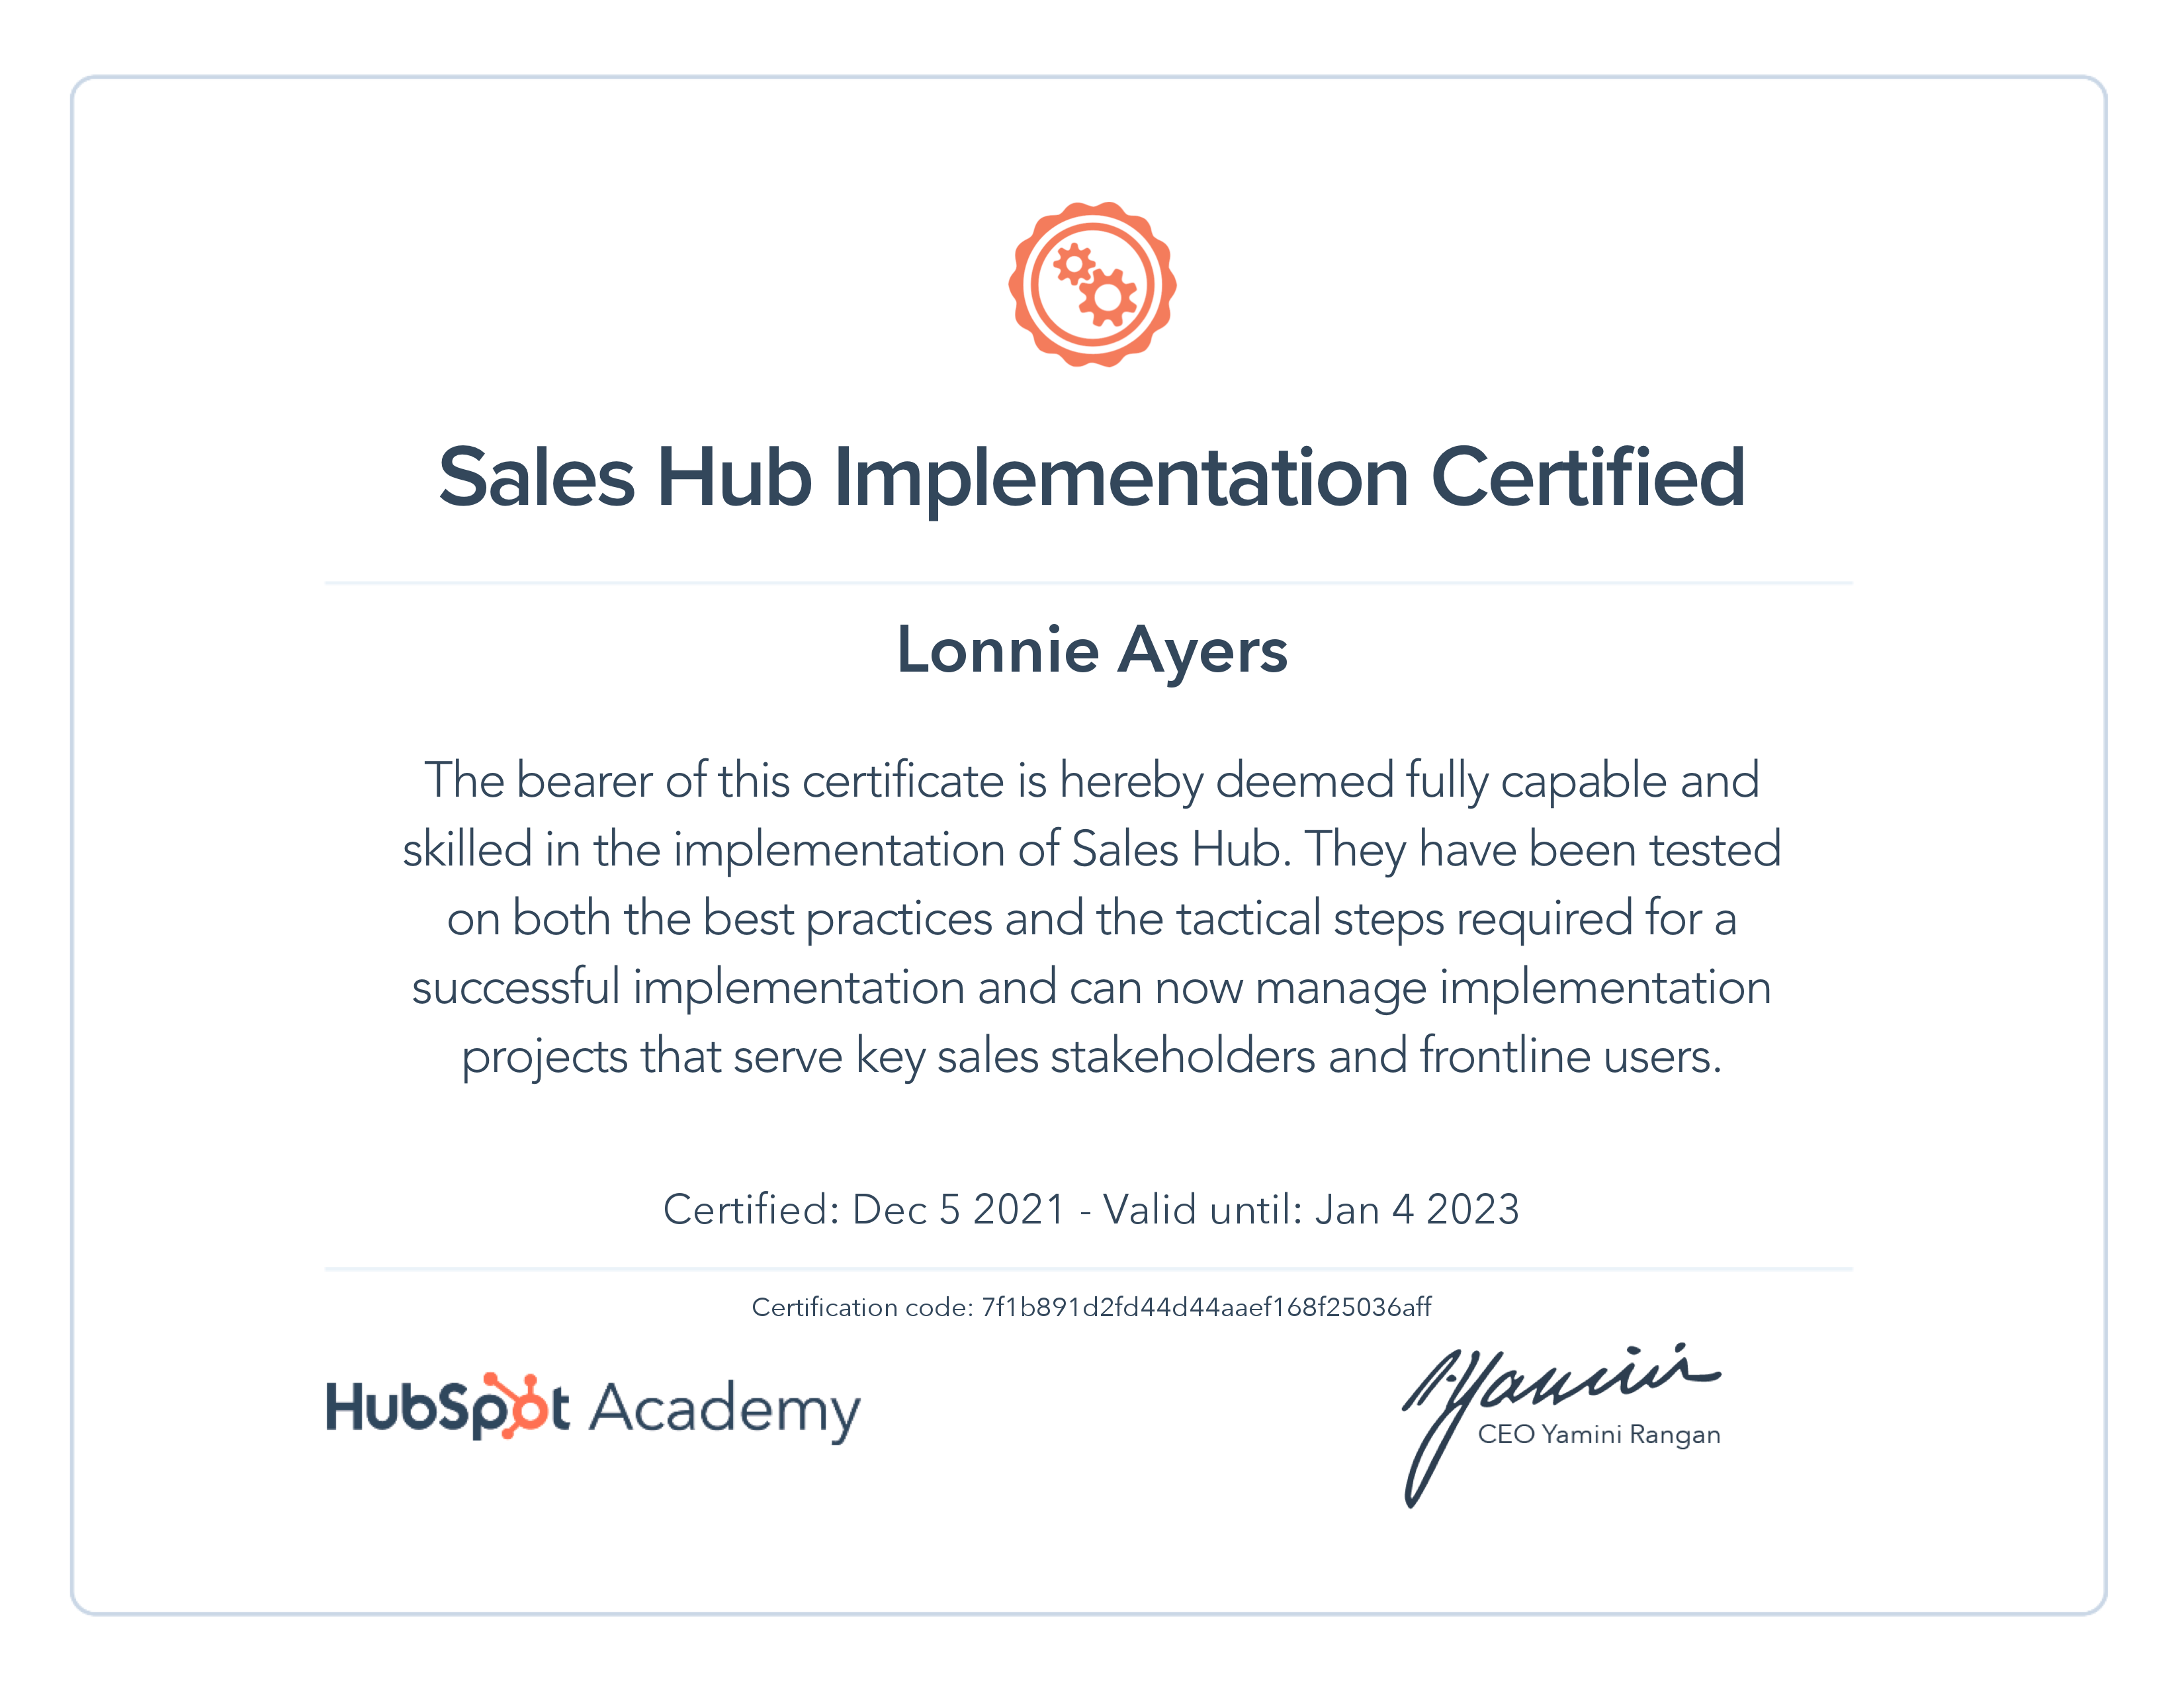 Sales Hub Implementation Certified 2021